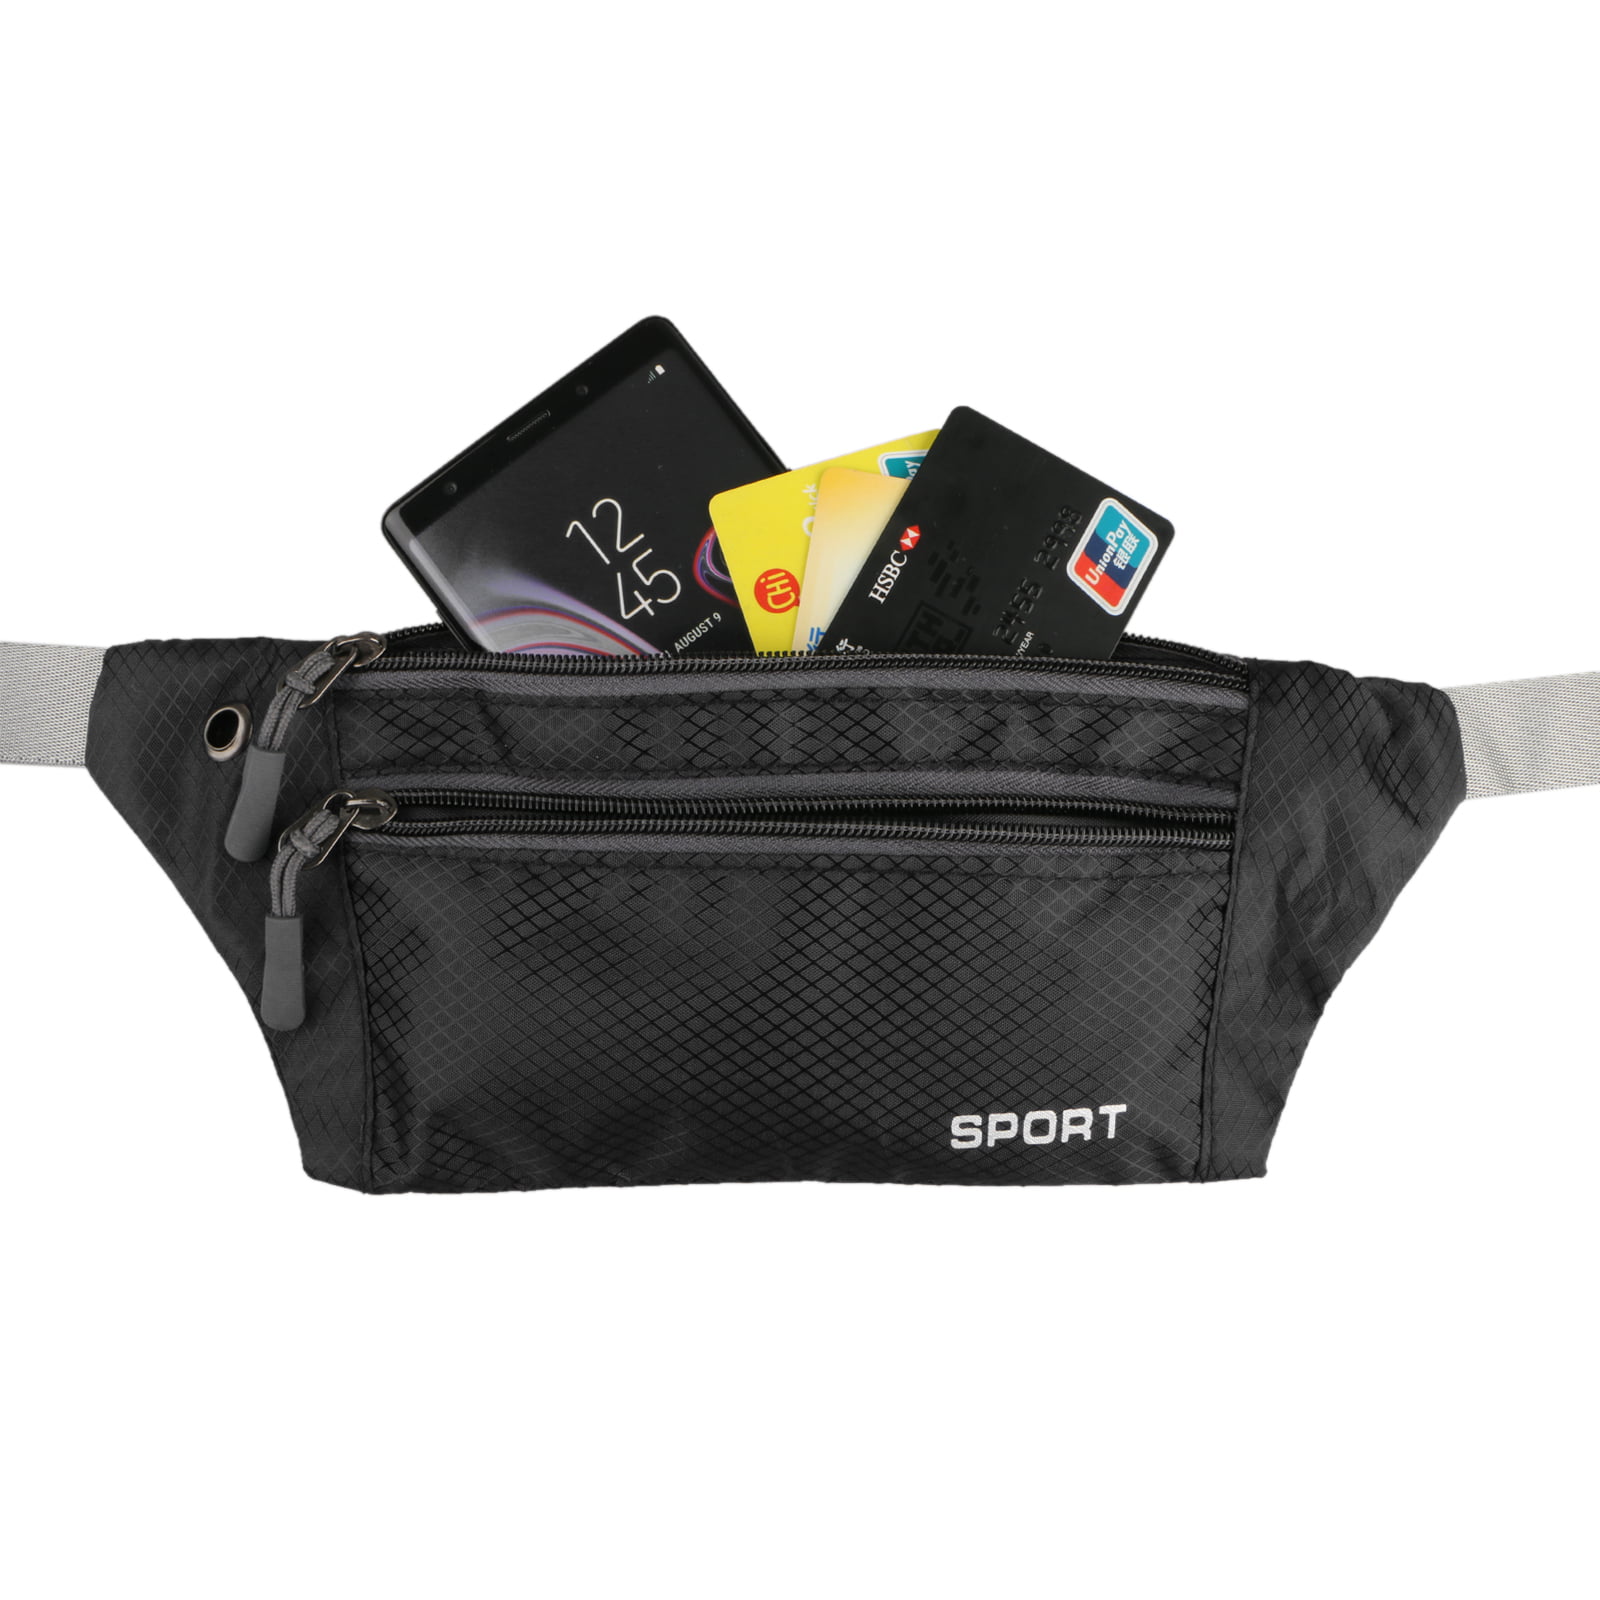 Unisex Pockets Chocolate Chip Cookies Fanny Pack Waist/Bum Bag Adjustable s Running Cycling Fishing Sport Waist Bags Black 